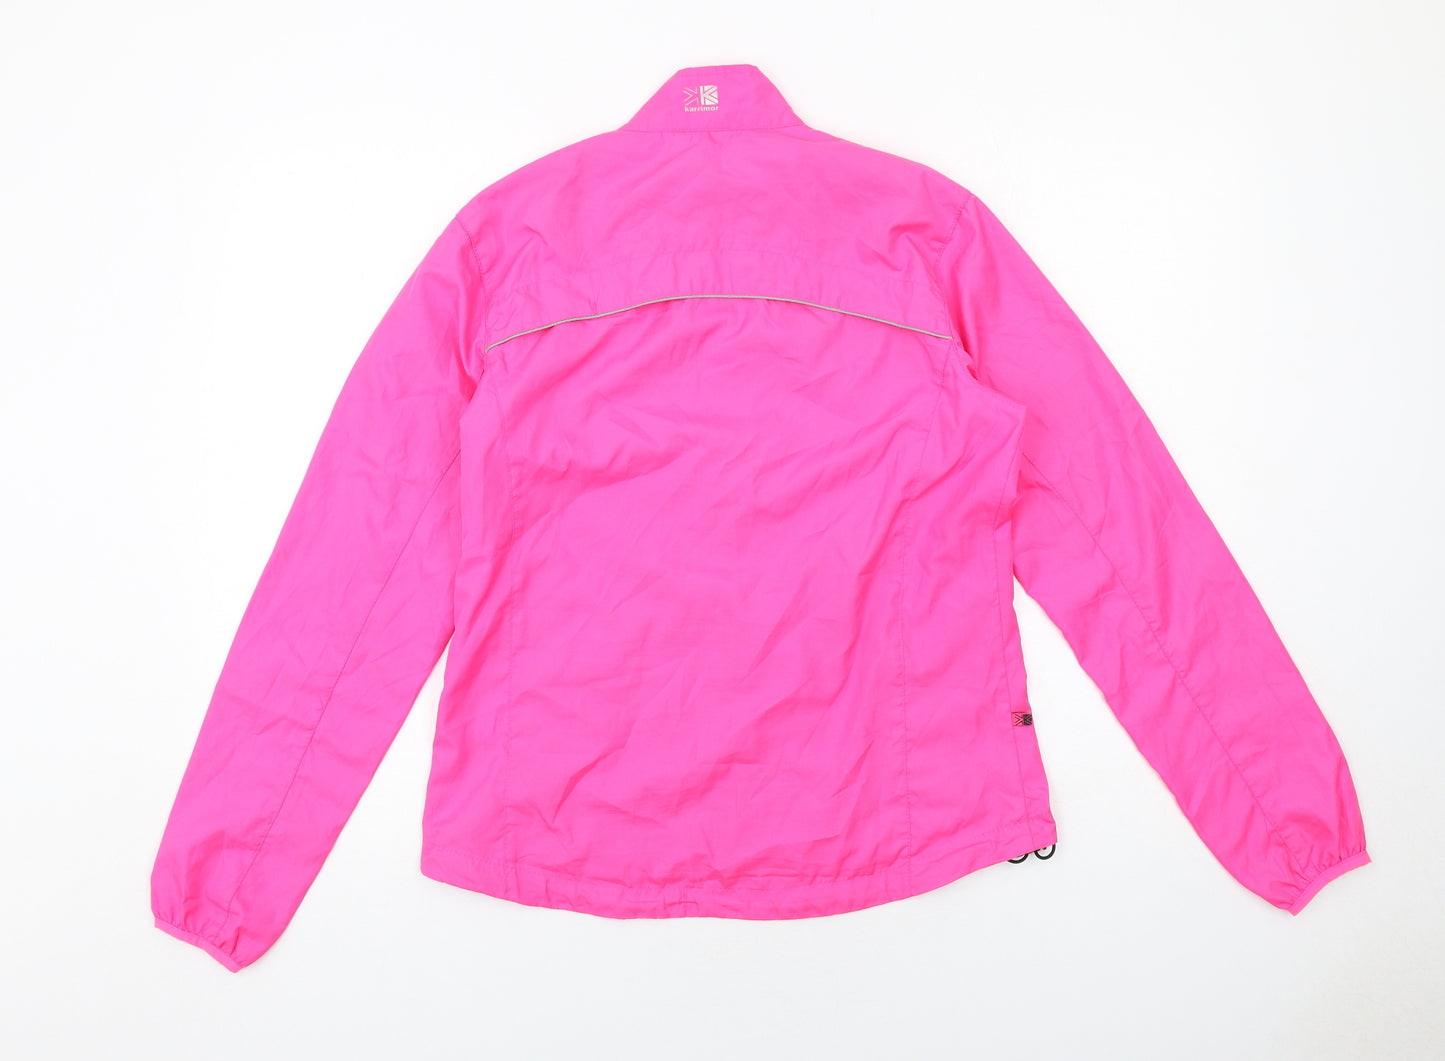 Karrimor Girls Pink Jacket Size 12 Years Zip